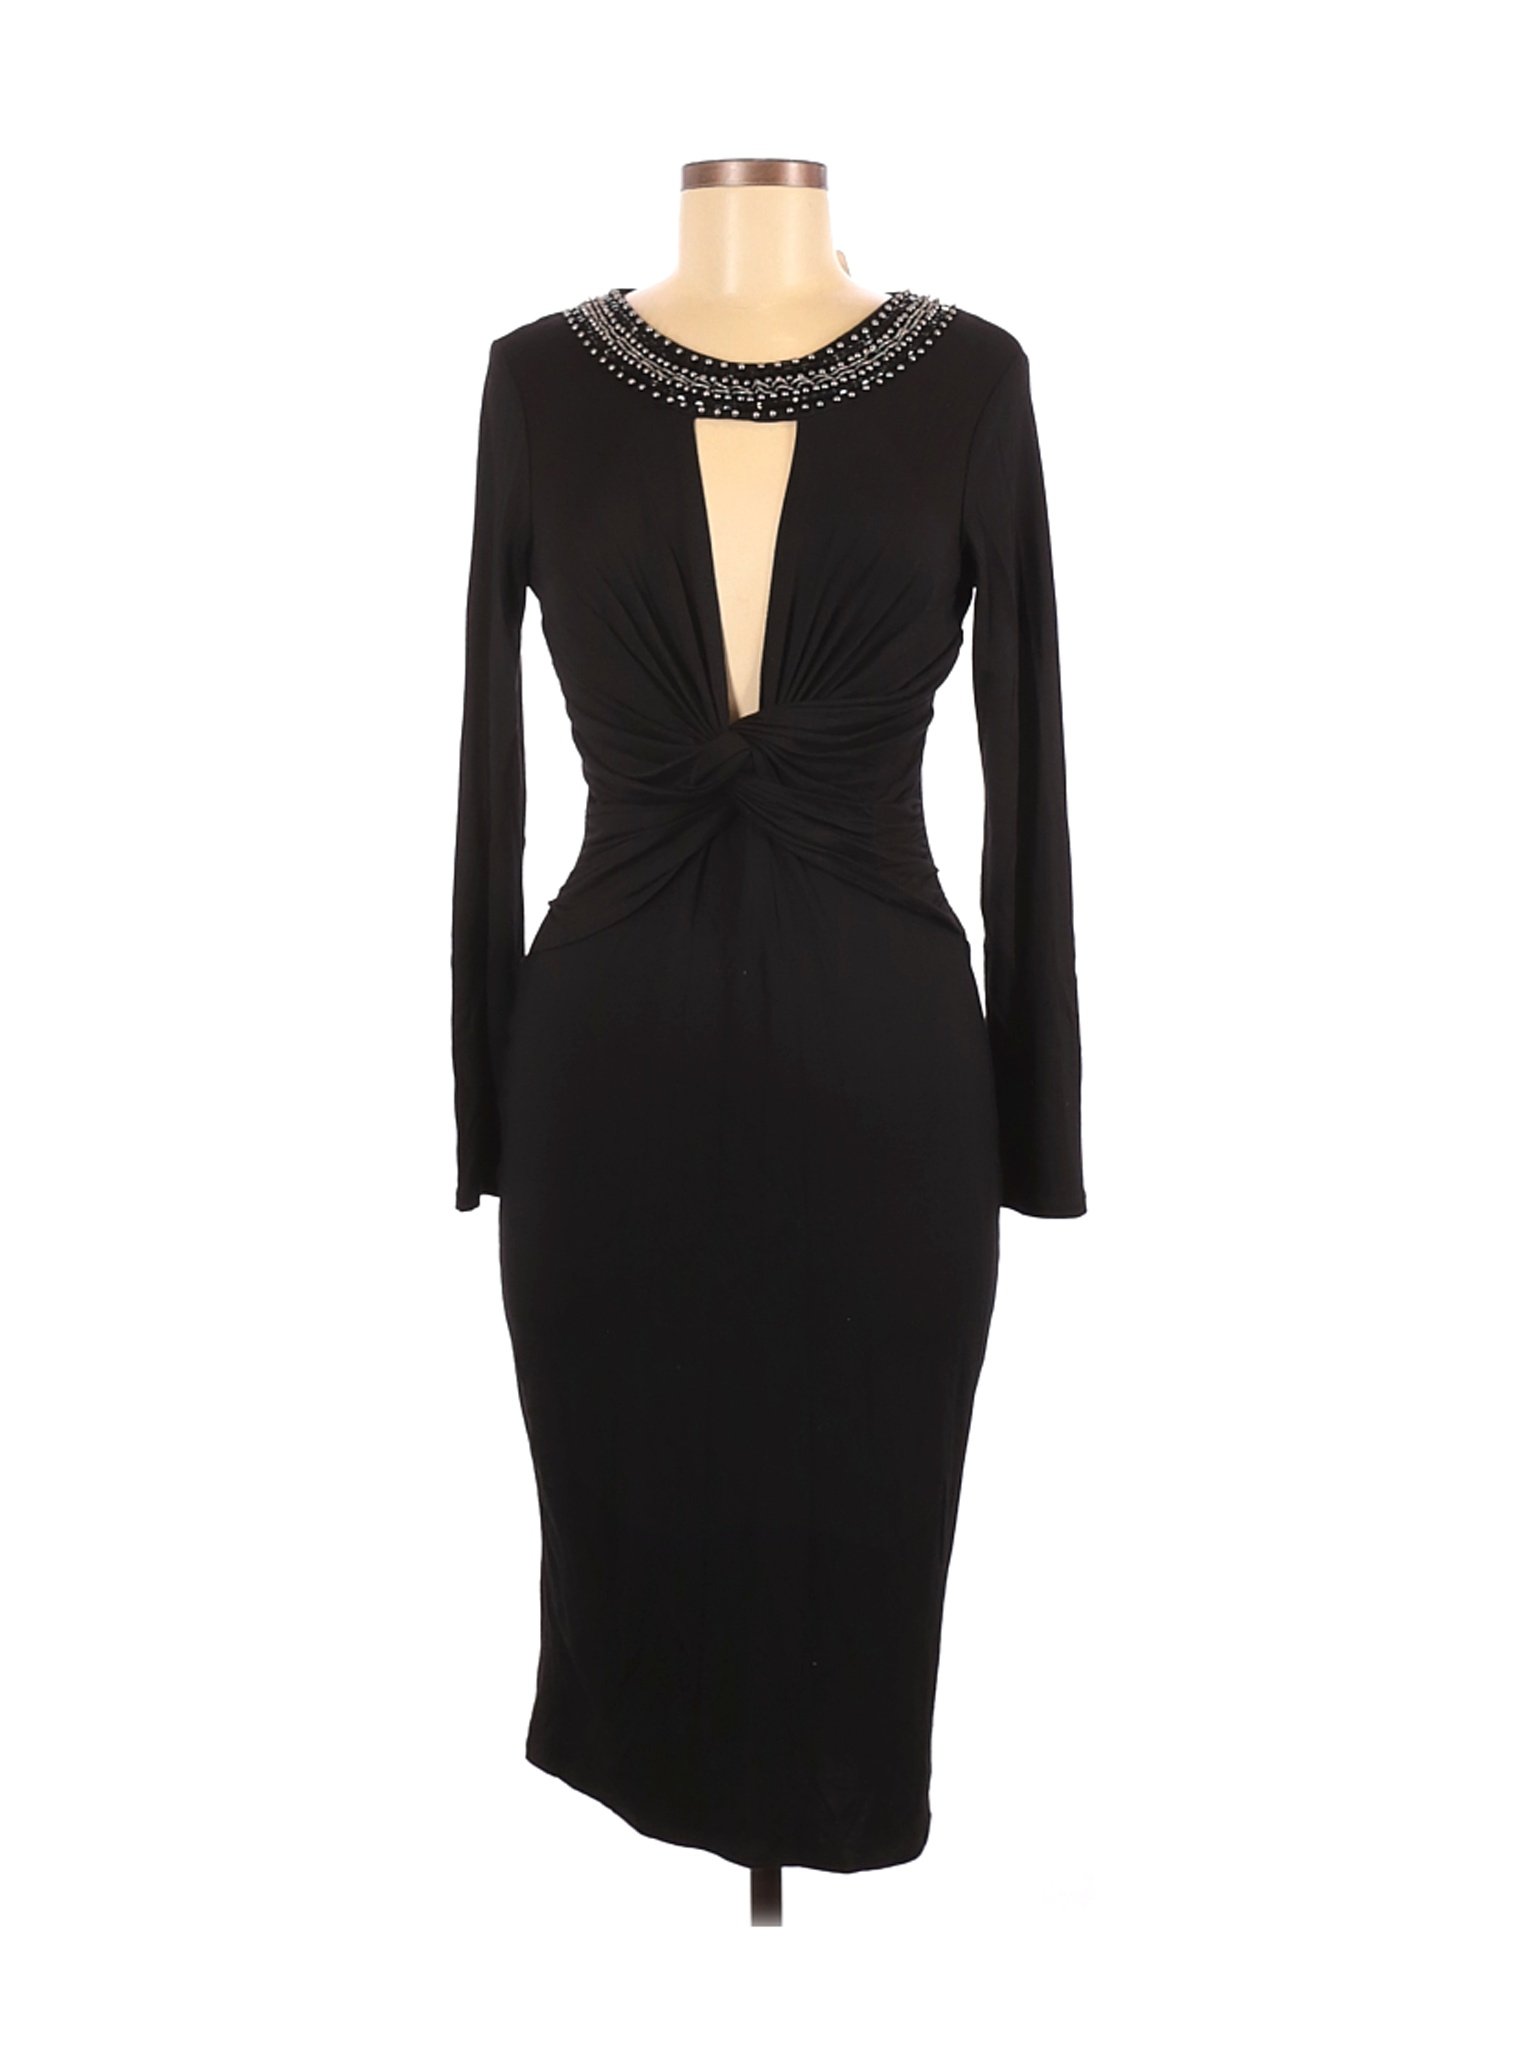 Venus Women Black Cocktail Dress M | eBay